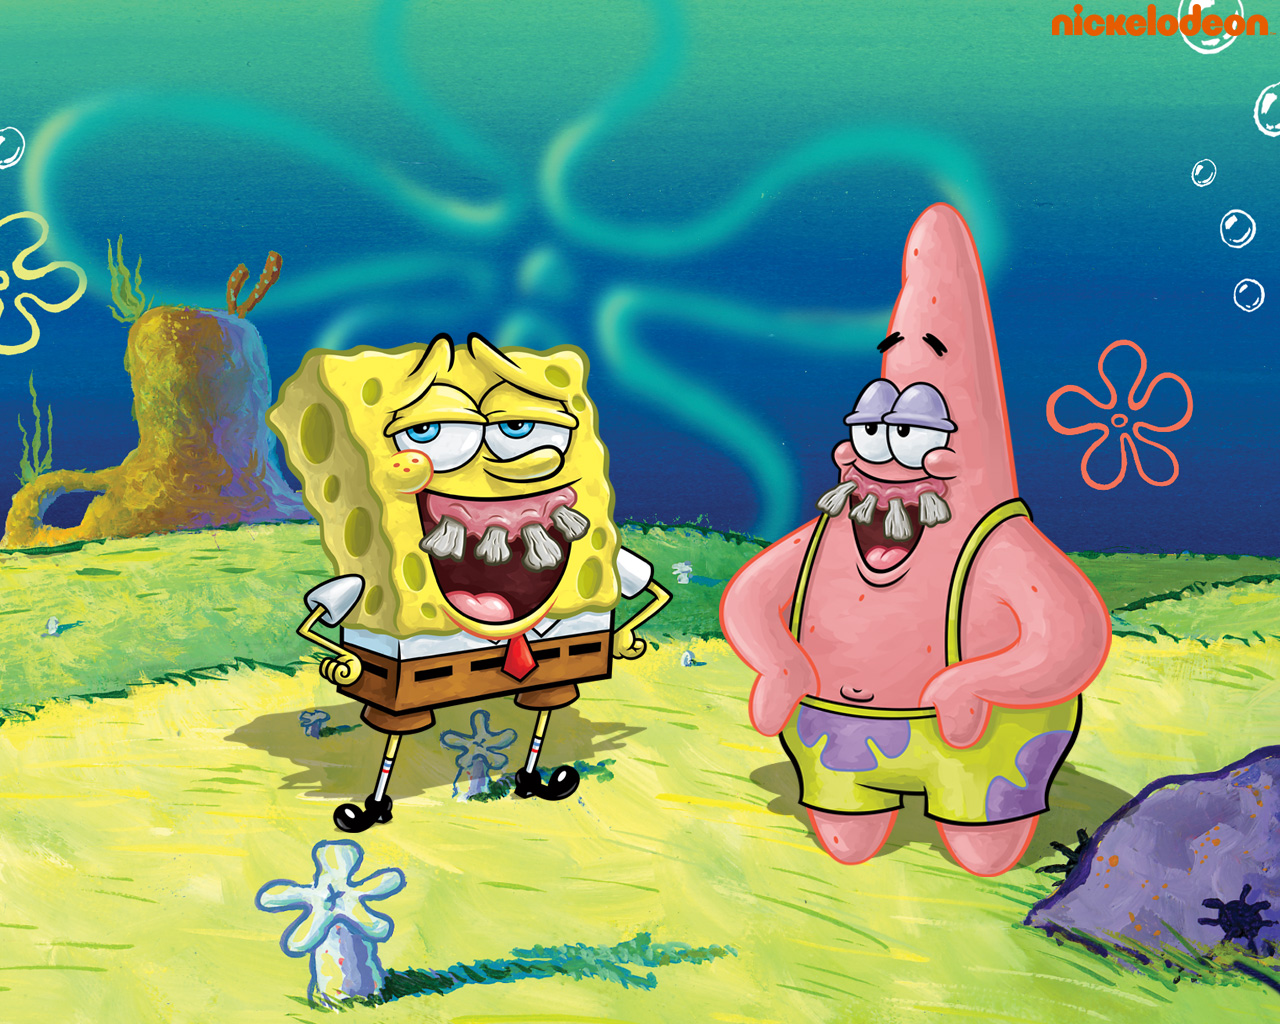 Download this Spongebob Patrick Squarepants picture